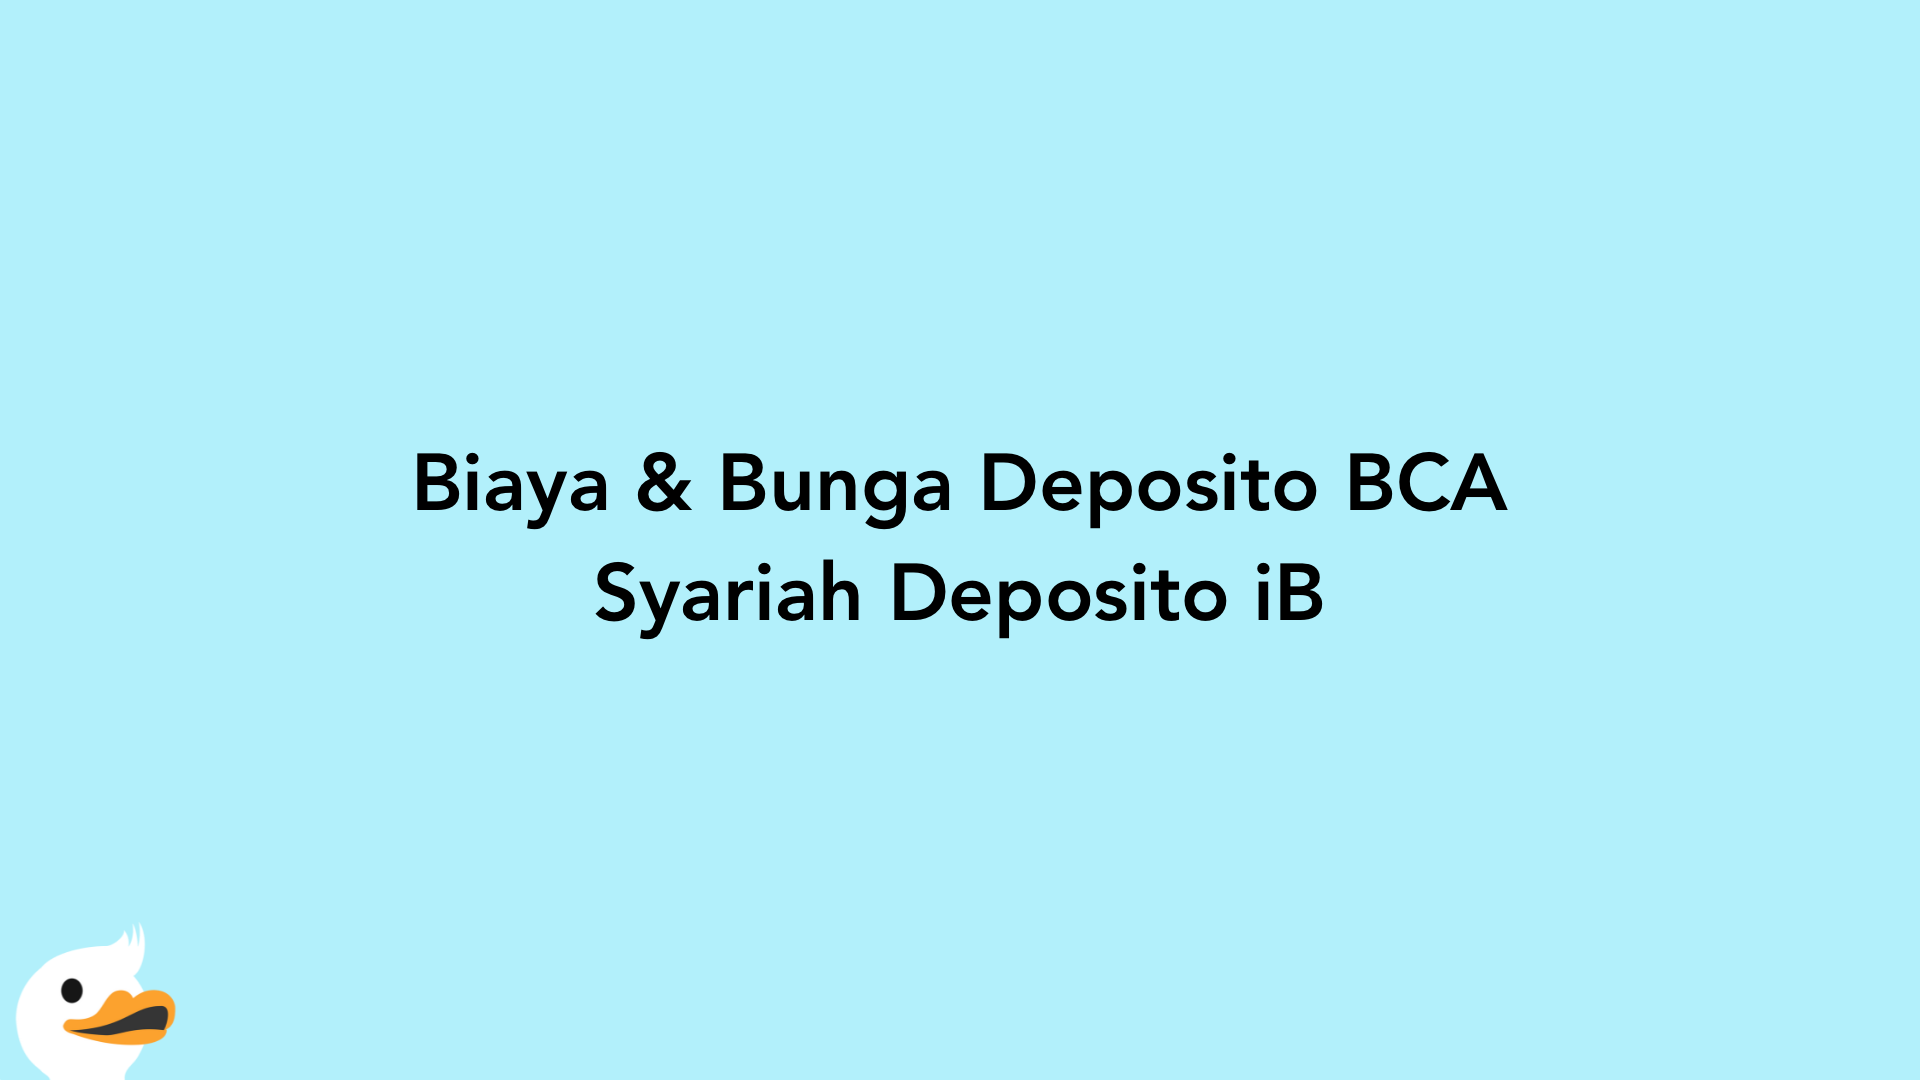 Biaya & Bunga Deposito BCA Syariah Deposito iB